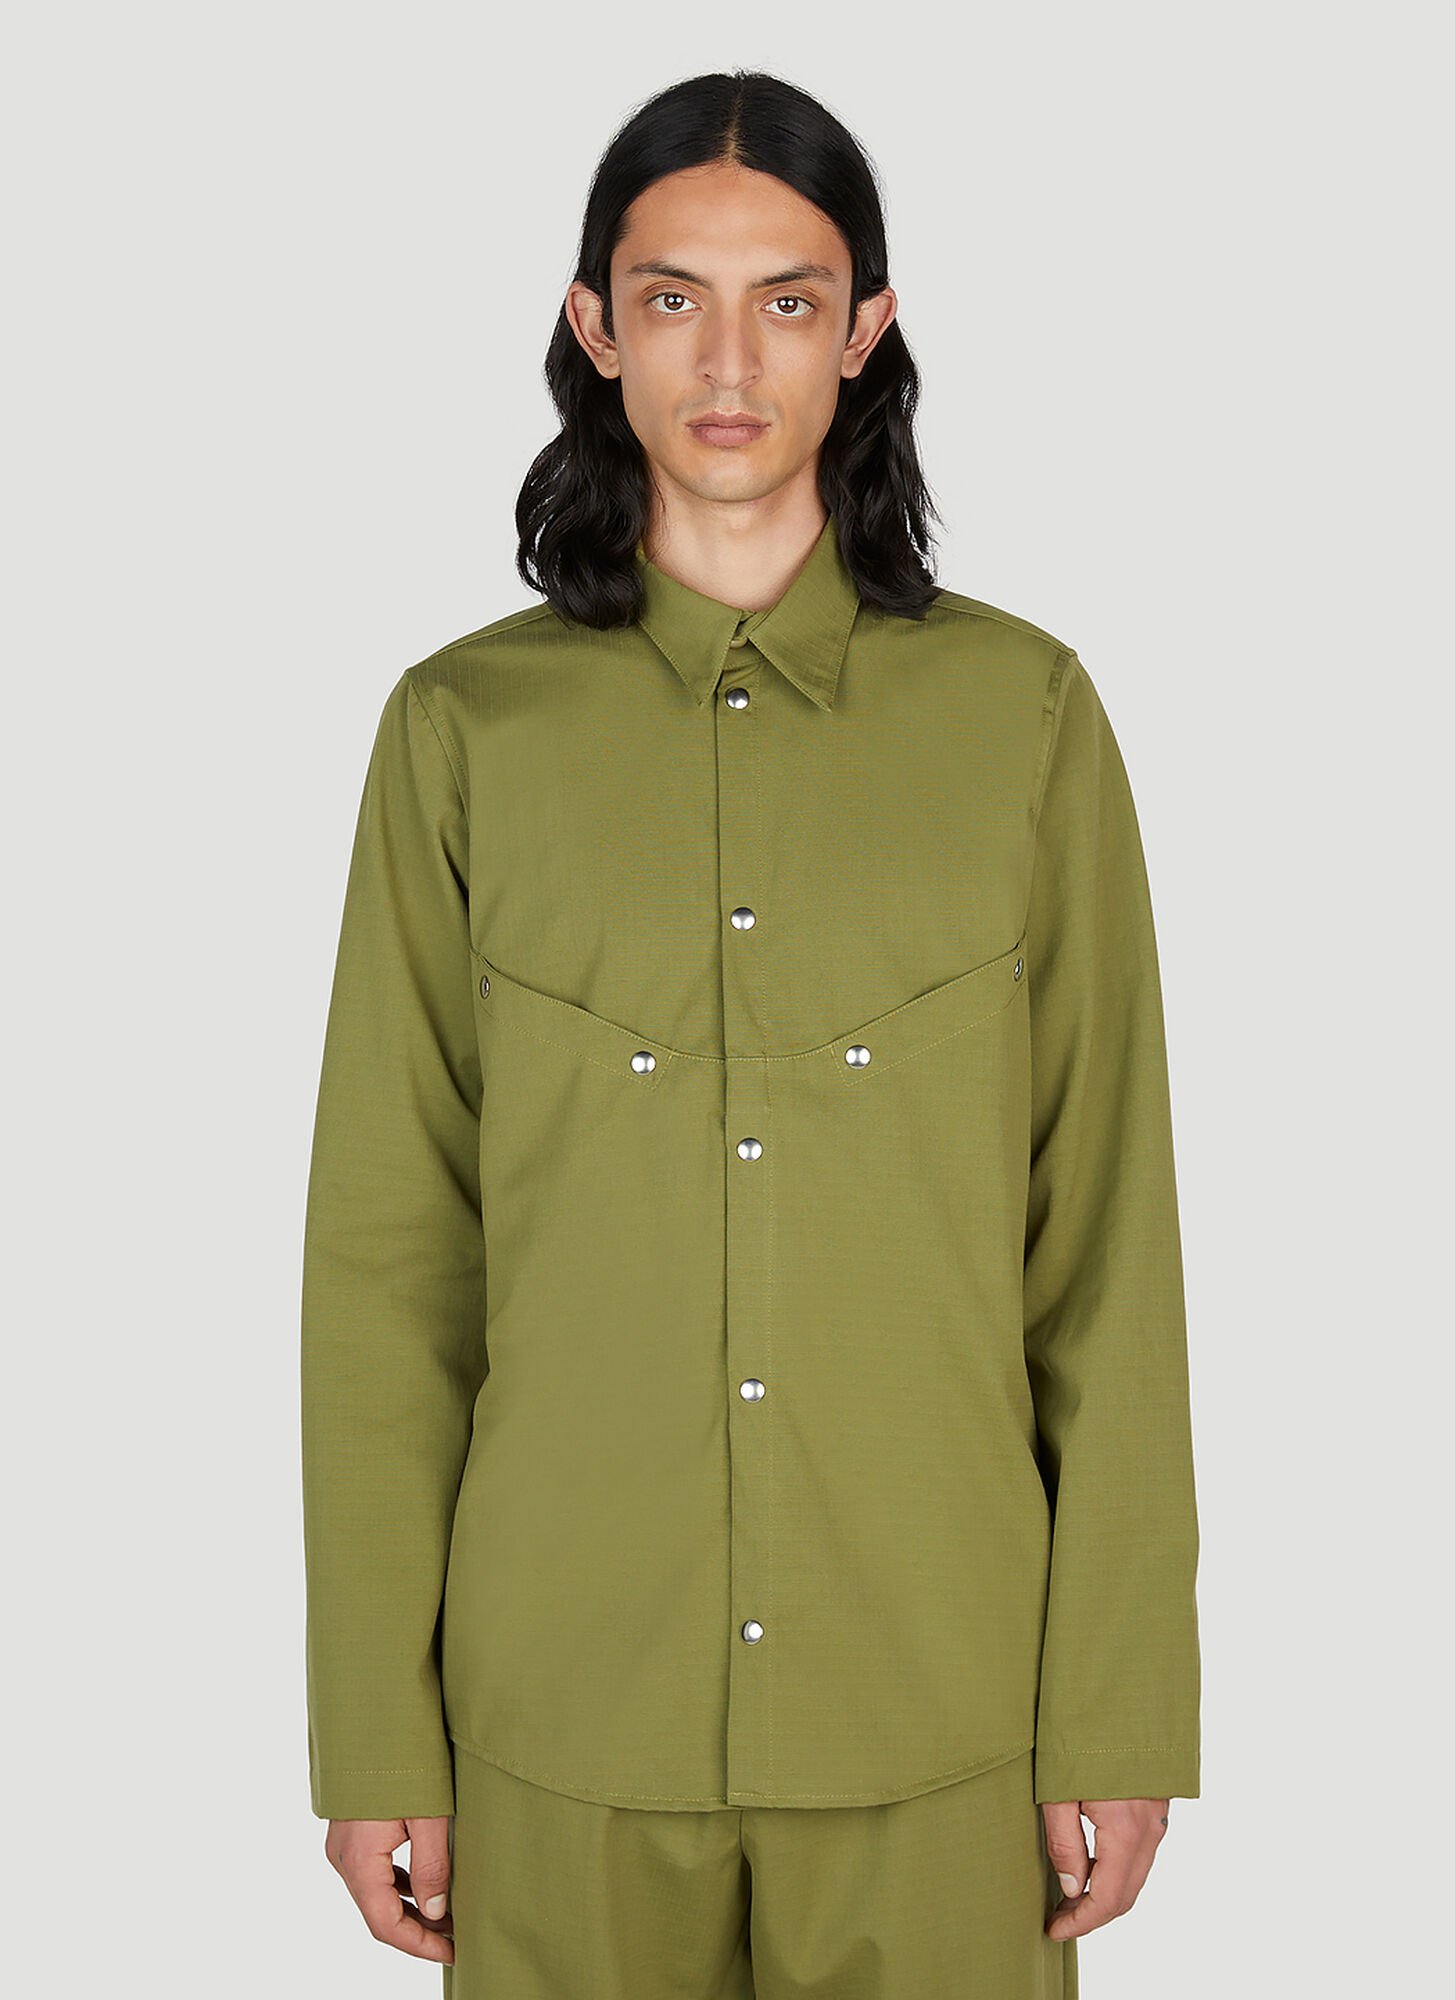 Ranra Jor Shirt In Green